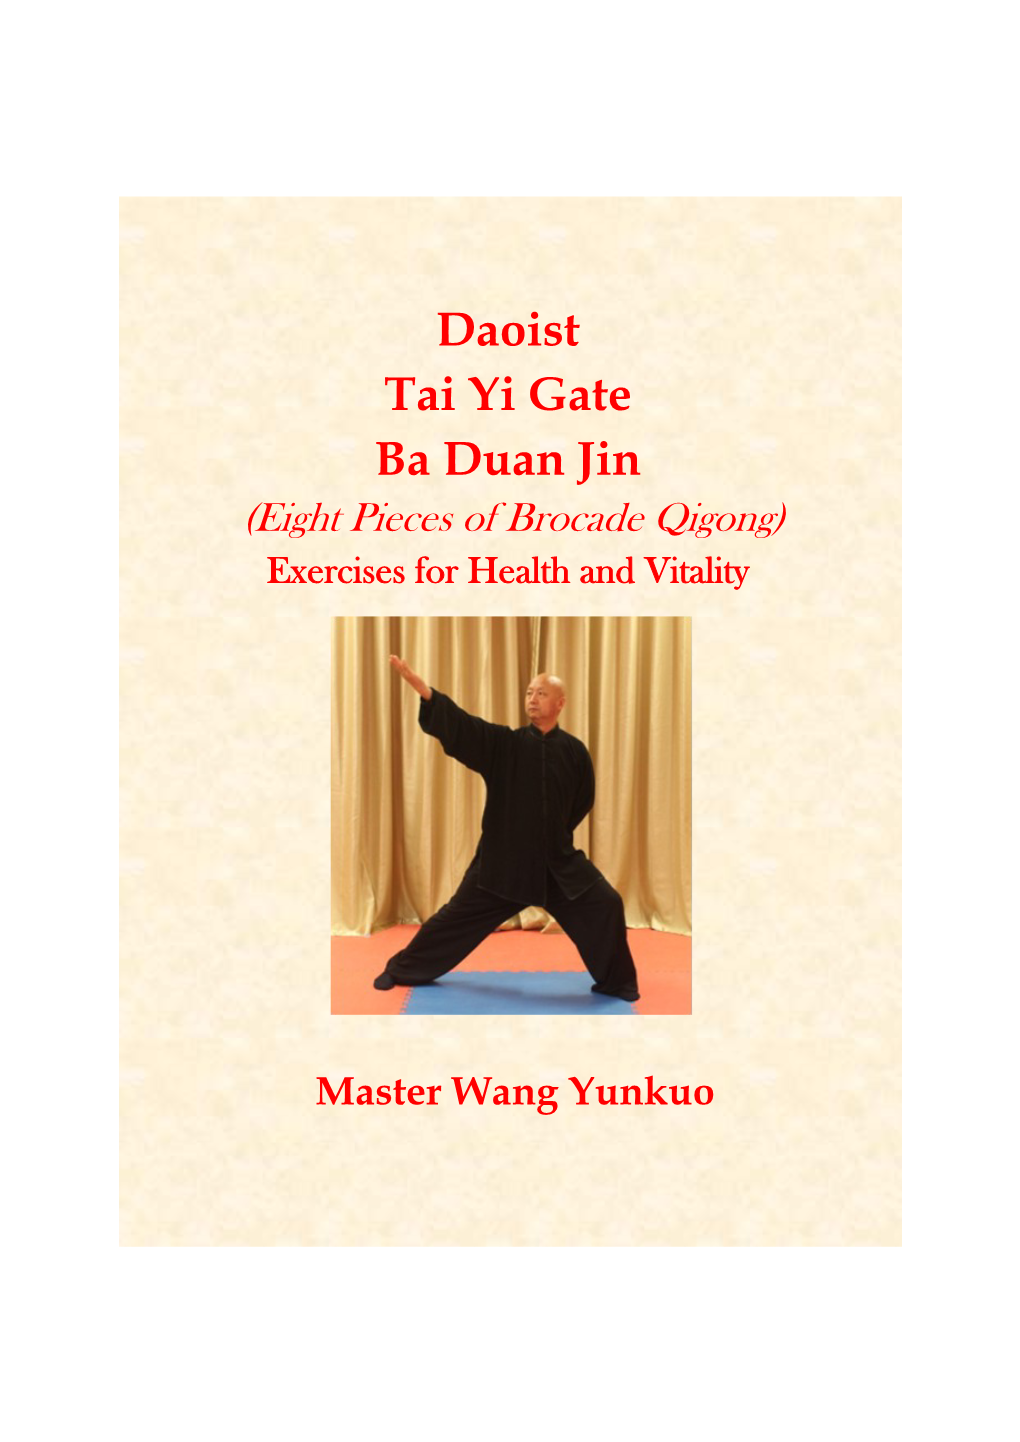 Daoist Ba Duan Jin Qigong Exercises